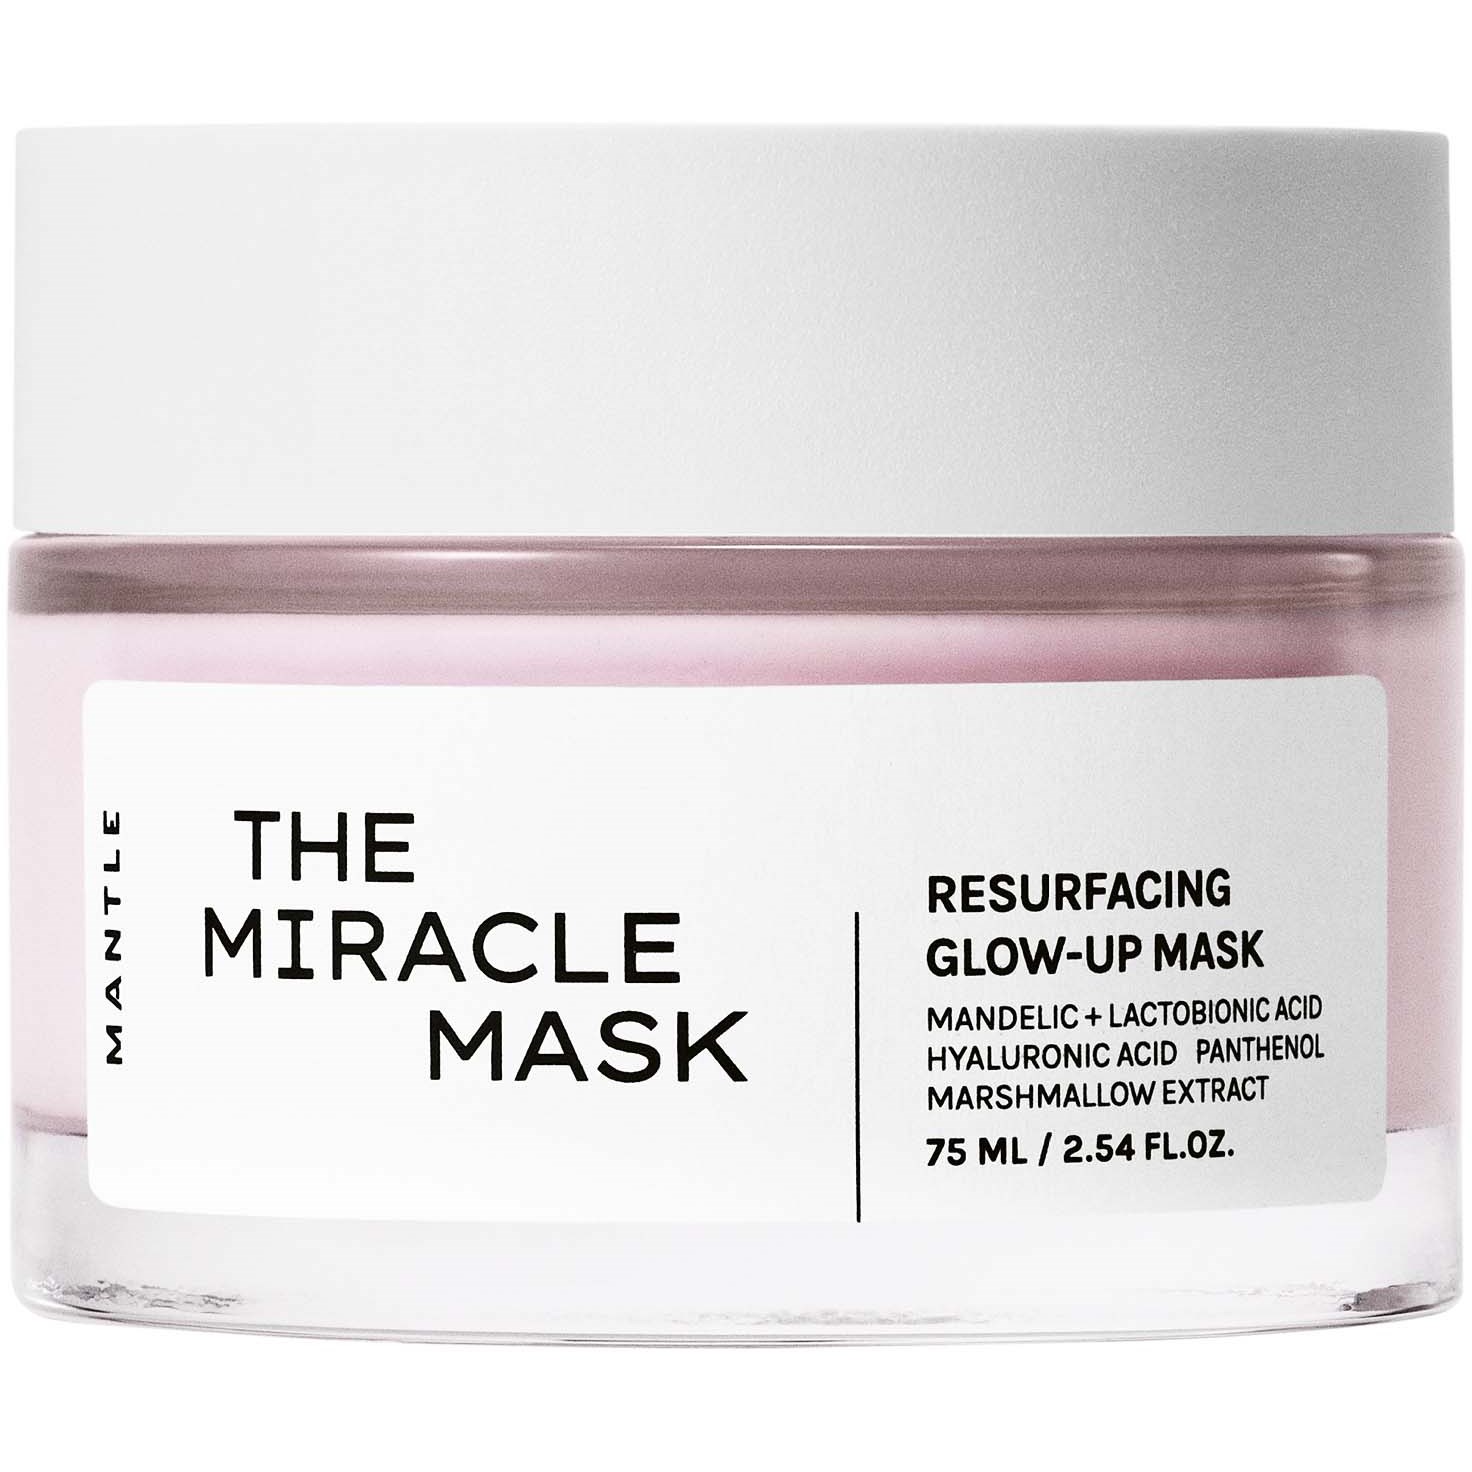 Bilde av Mantle The Miracle Mask – Resurfacing Glow-up Mask 75 Ml